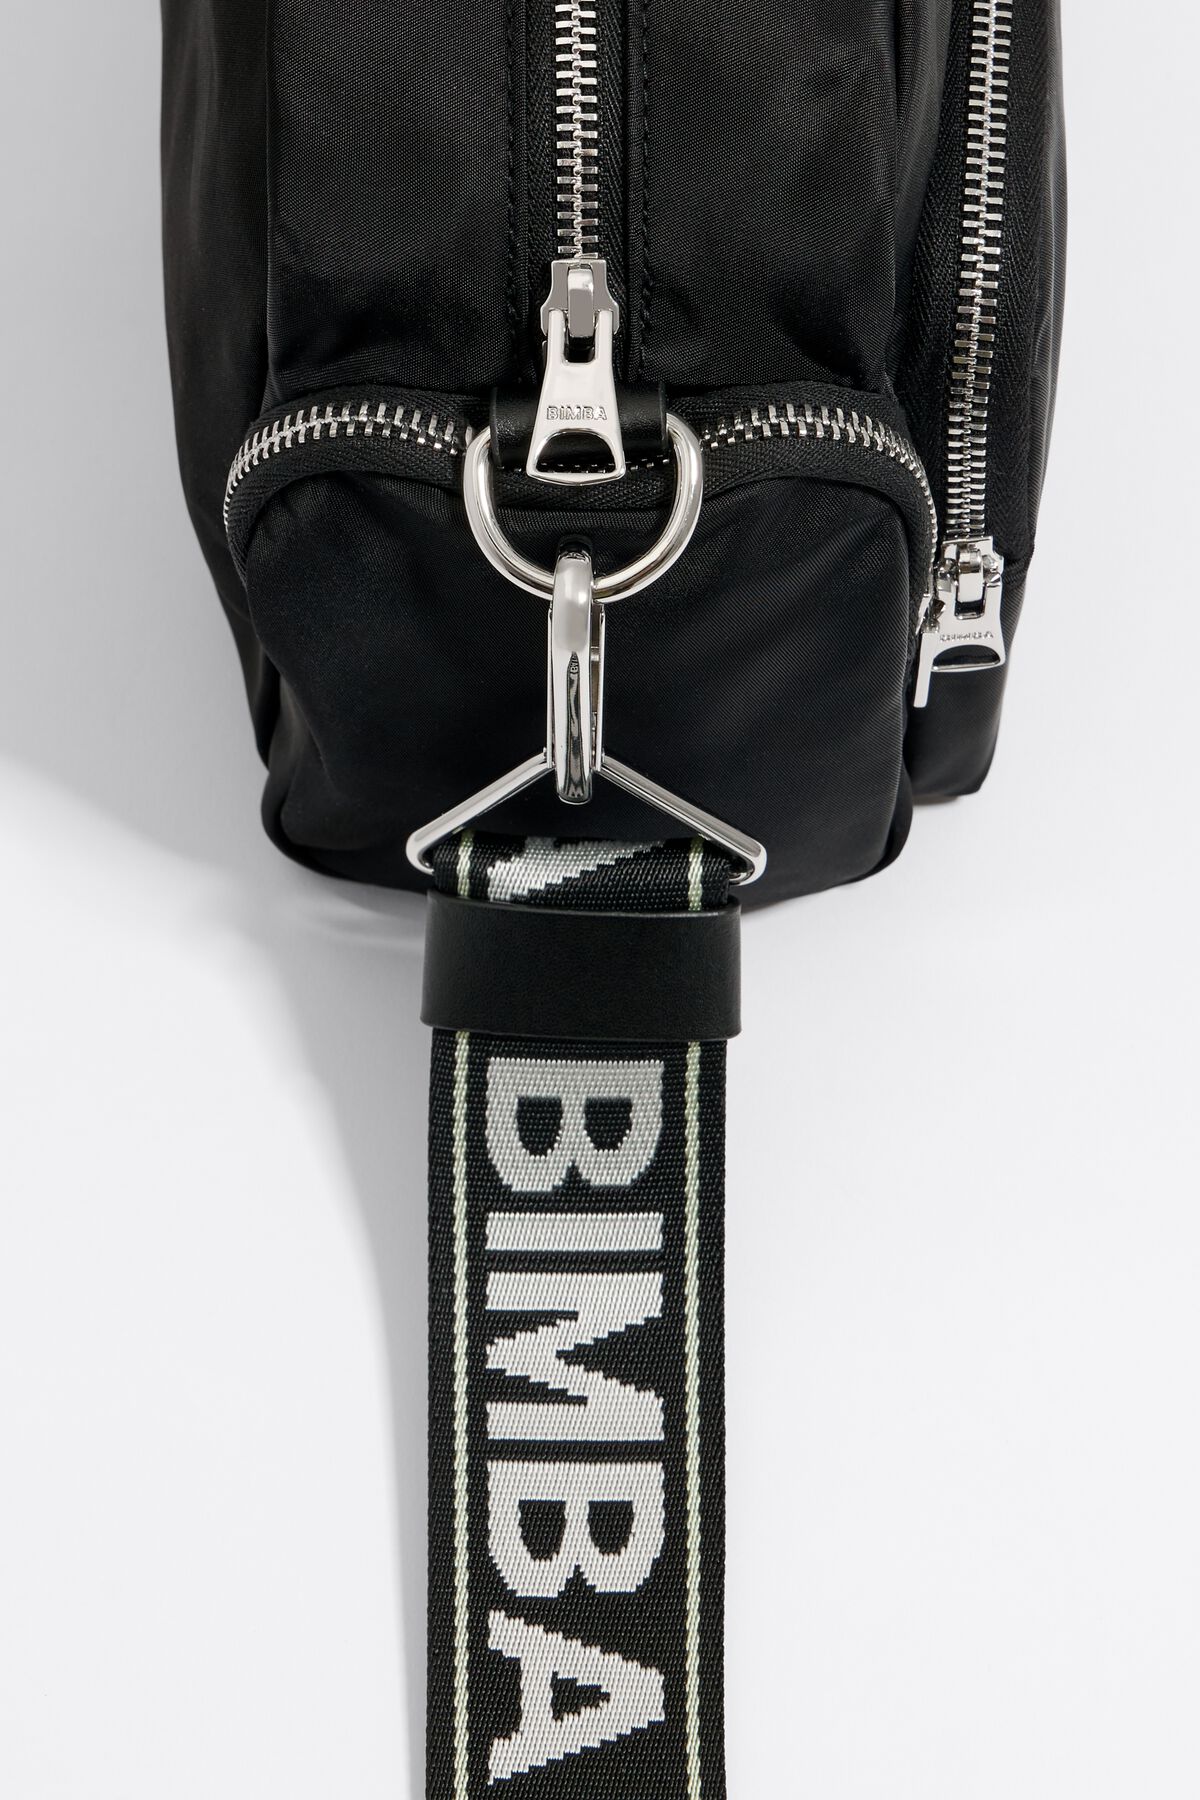 Shop bimba & lola S black nylon crossbody bag (231BBLJ1M.T2000) by Kinnie98